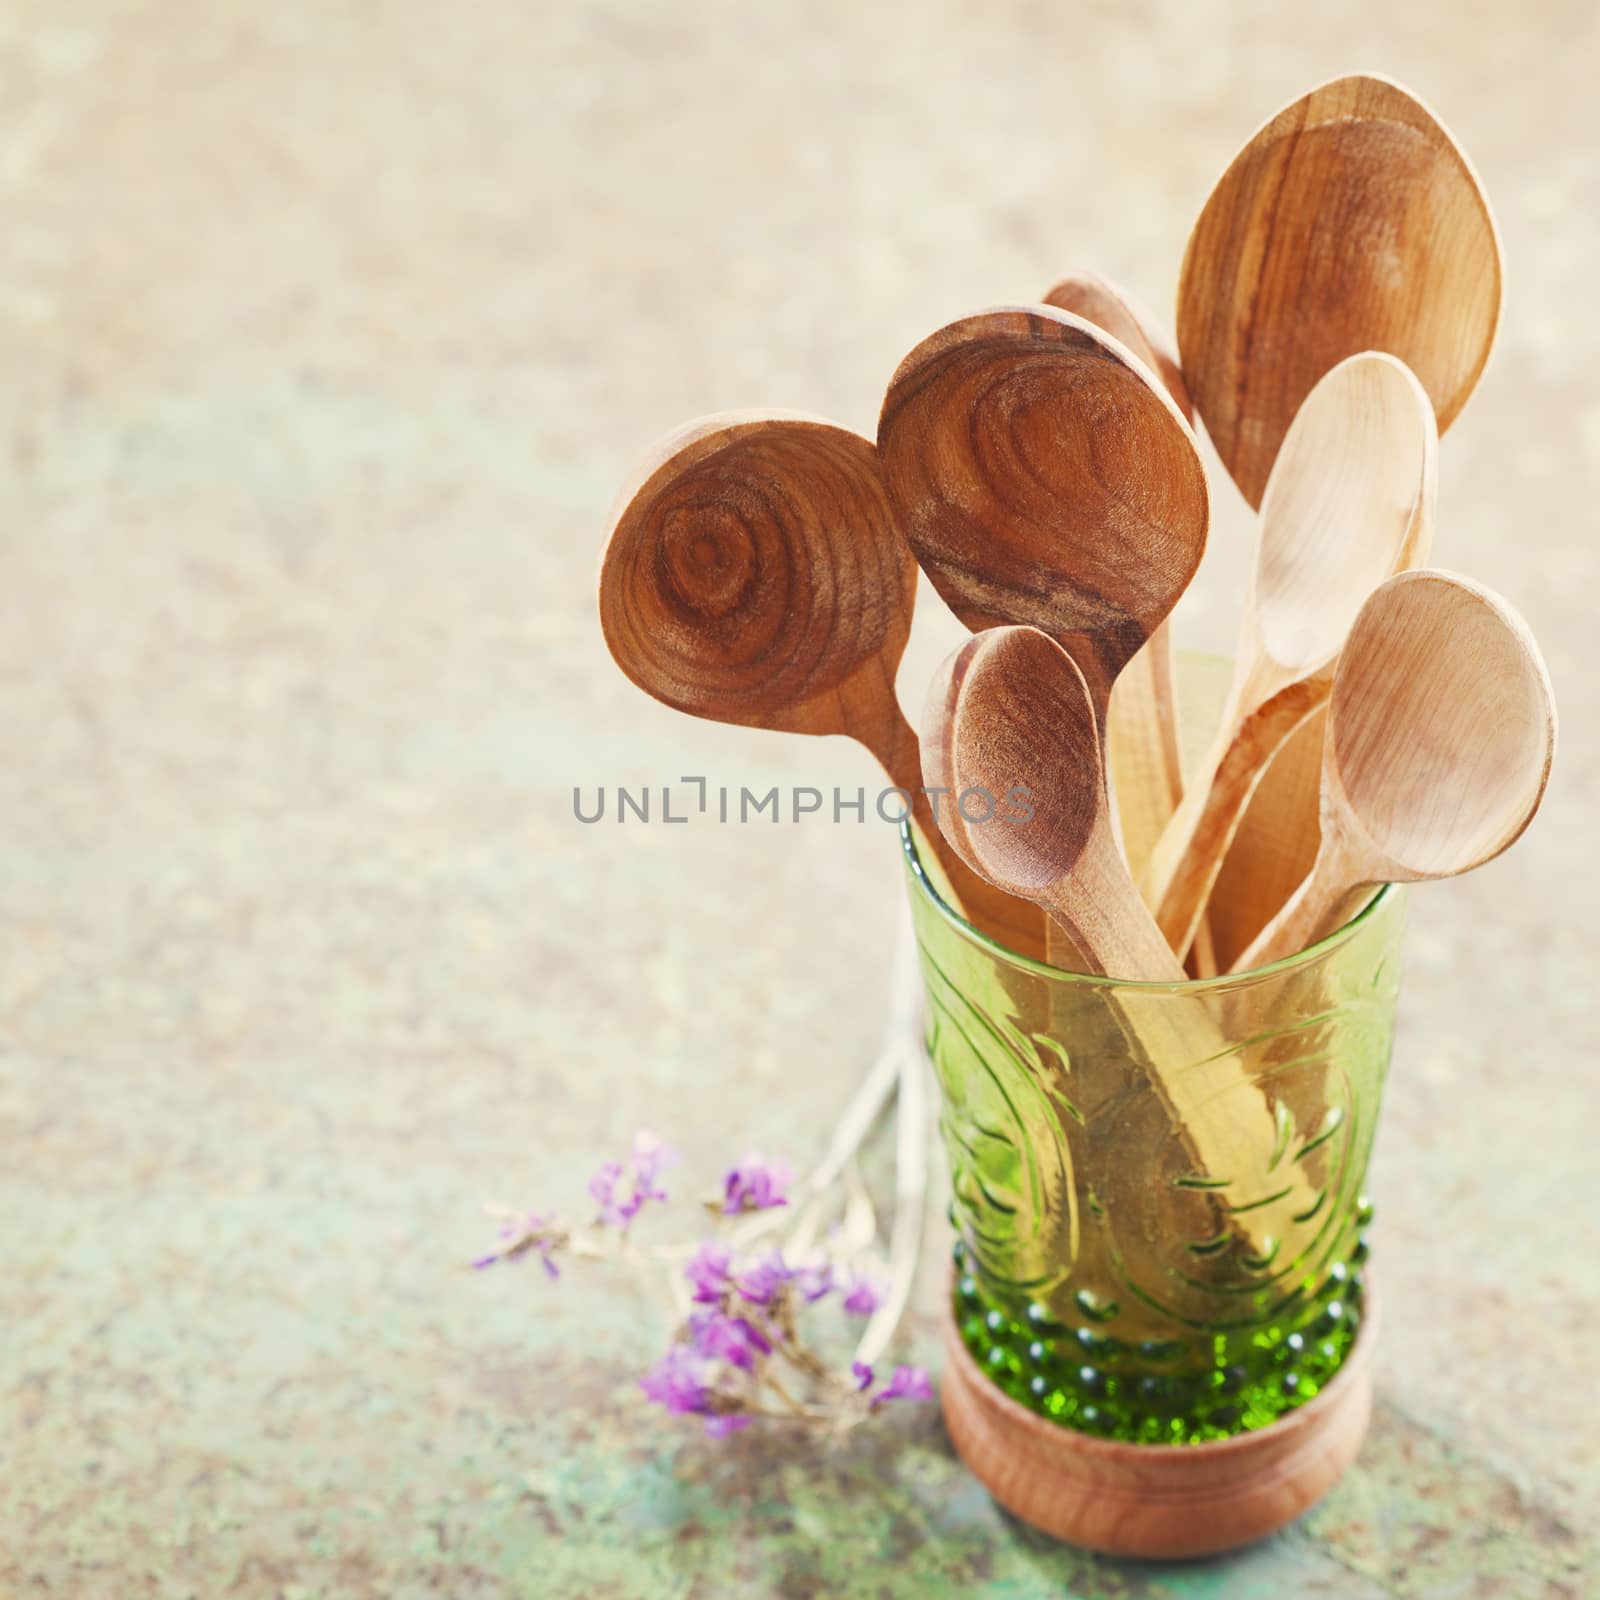 Wooden cooking utensils by mariakomar